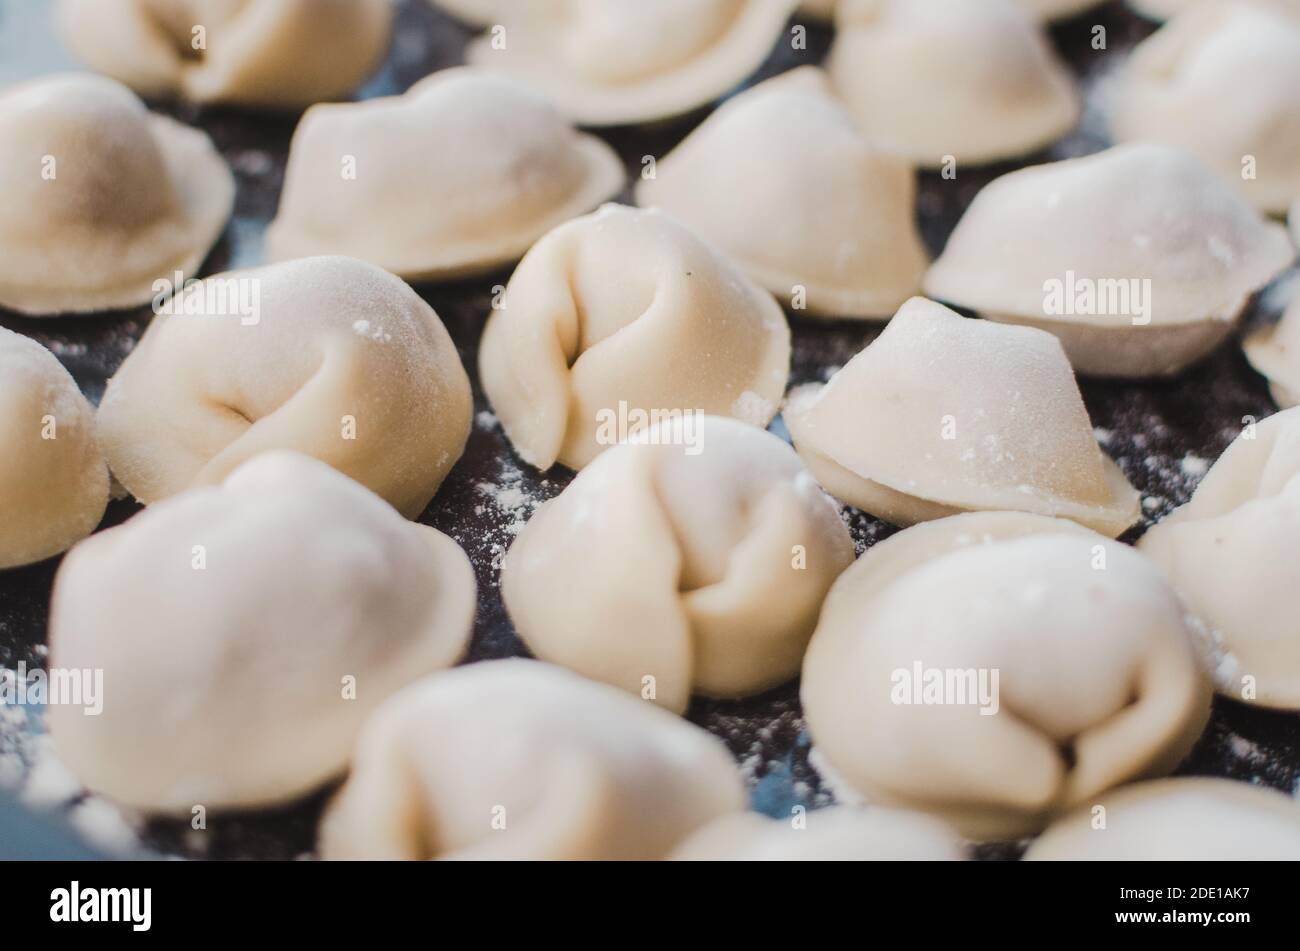 pelmeni or Russian dumpling made freshly by Russian chef in Bali, Indonesia Stock Photo